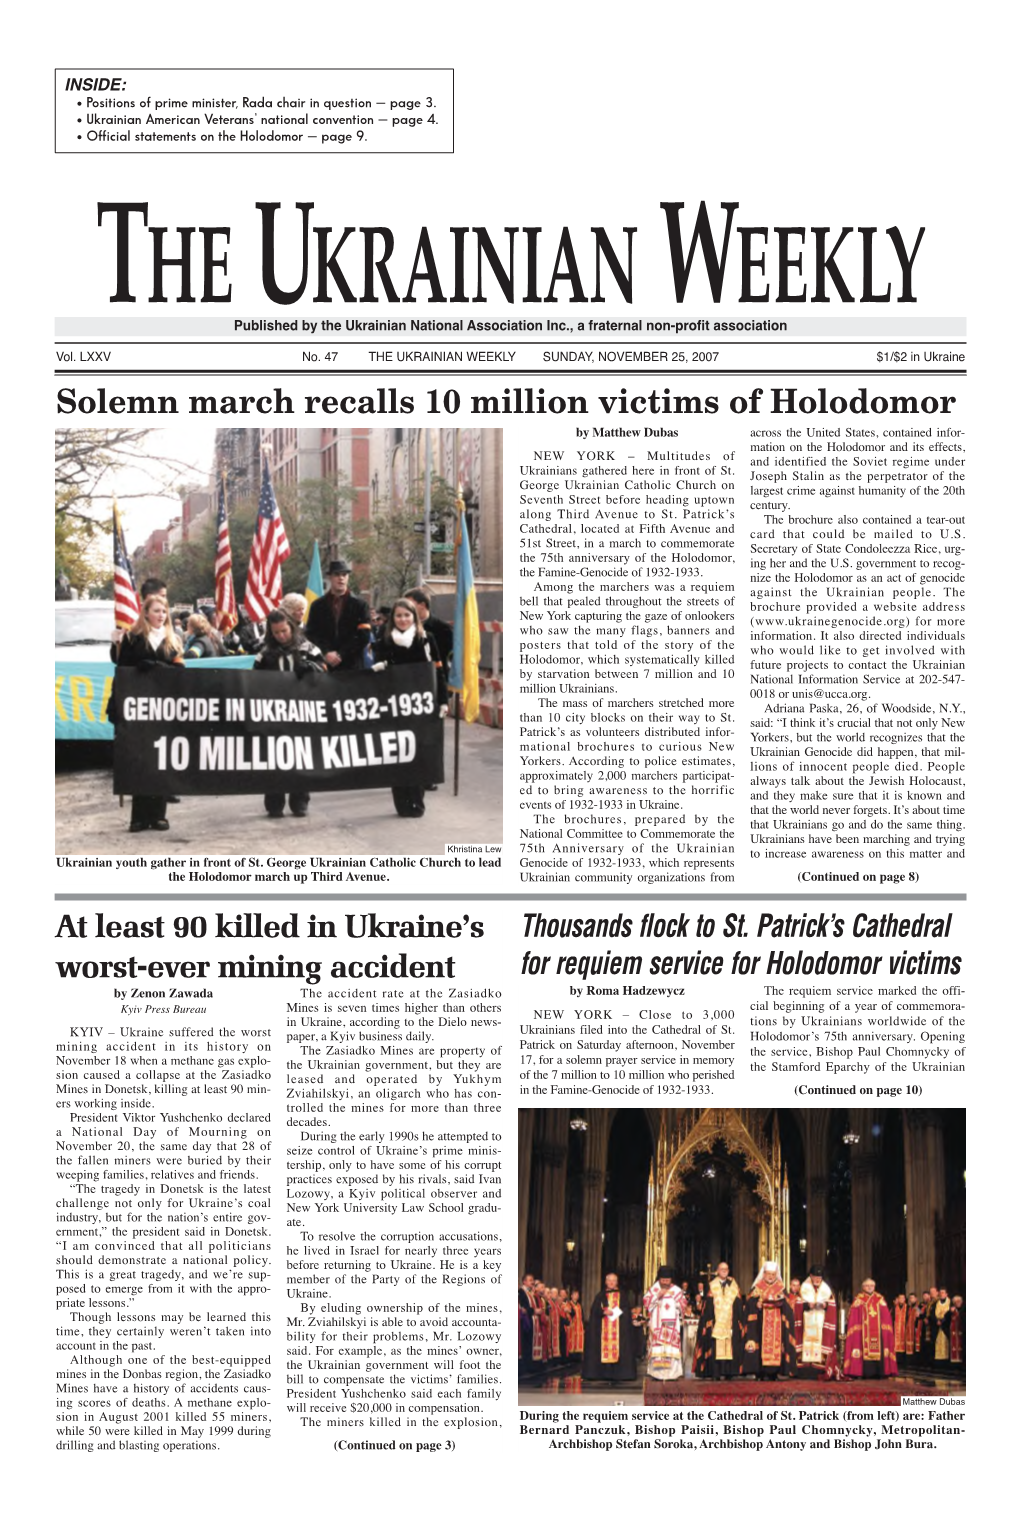 The Ukrainian Weekly 2007, No.47